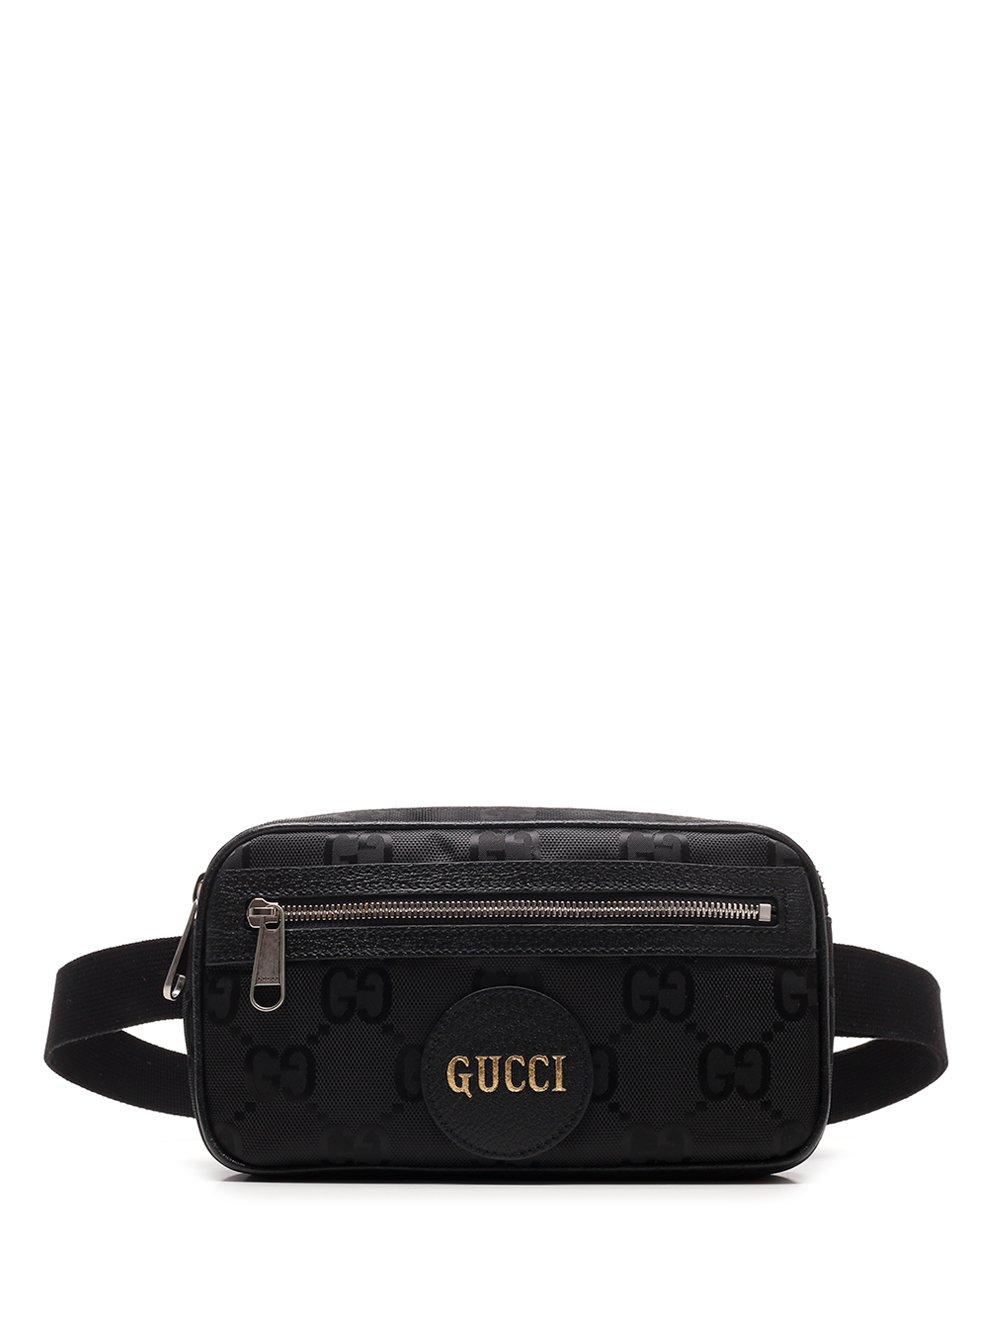 Gucci Synthetic Off The Grid Belt Bag in Black/ (Black) for Men - Save ...